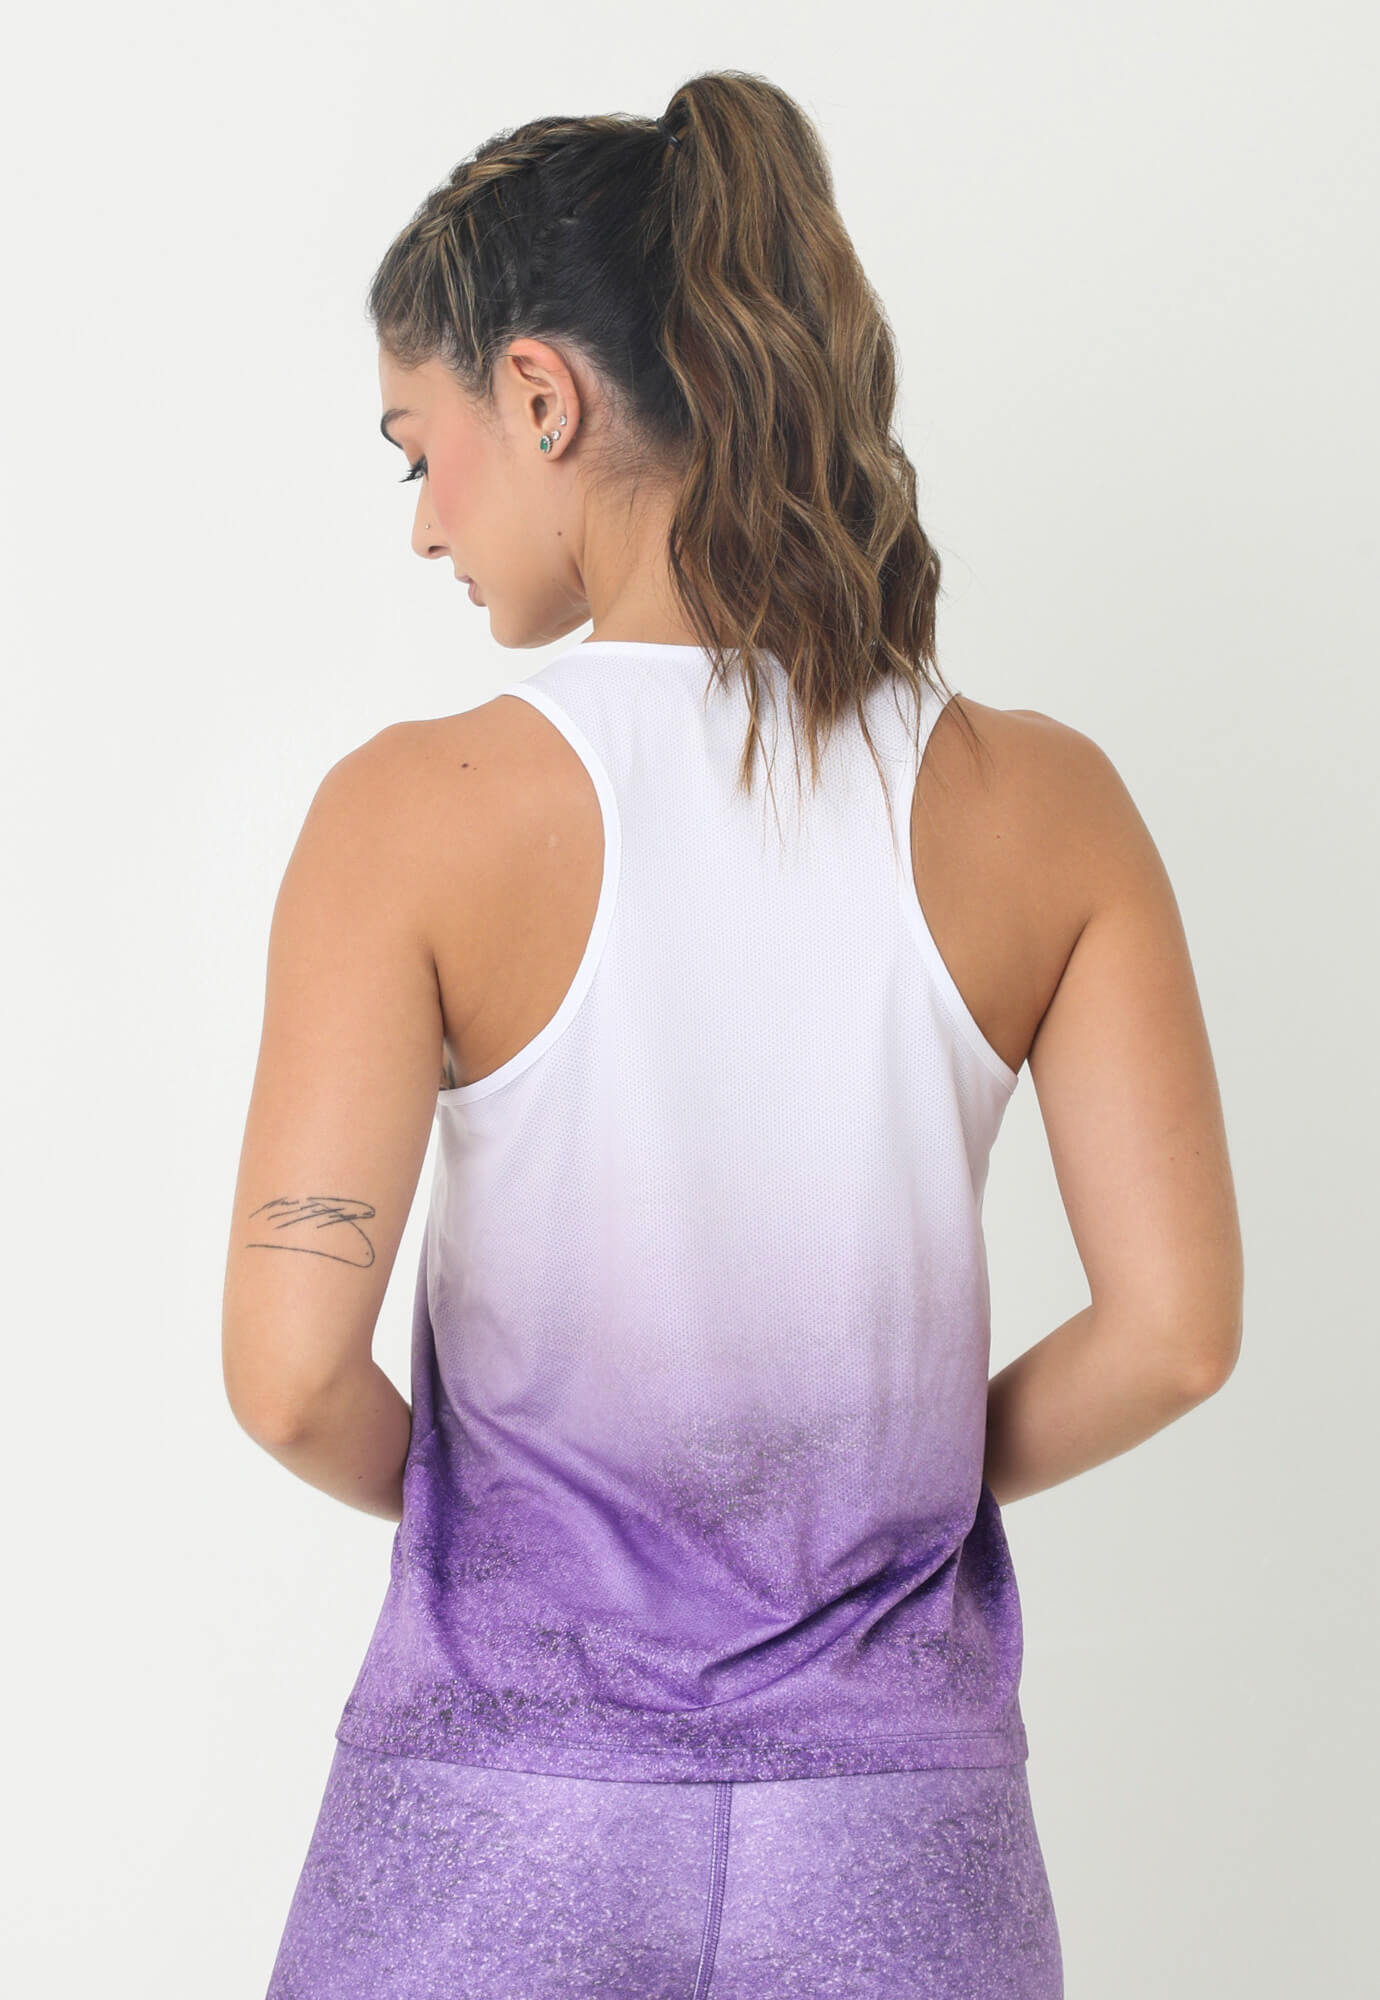 Camiseta deportiva morado lavanda sublimada en degradé y manga sisa sesgada para mujer